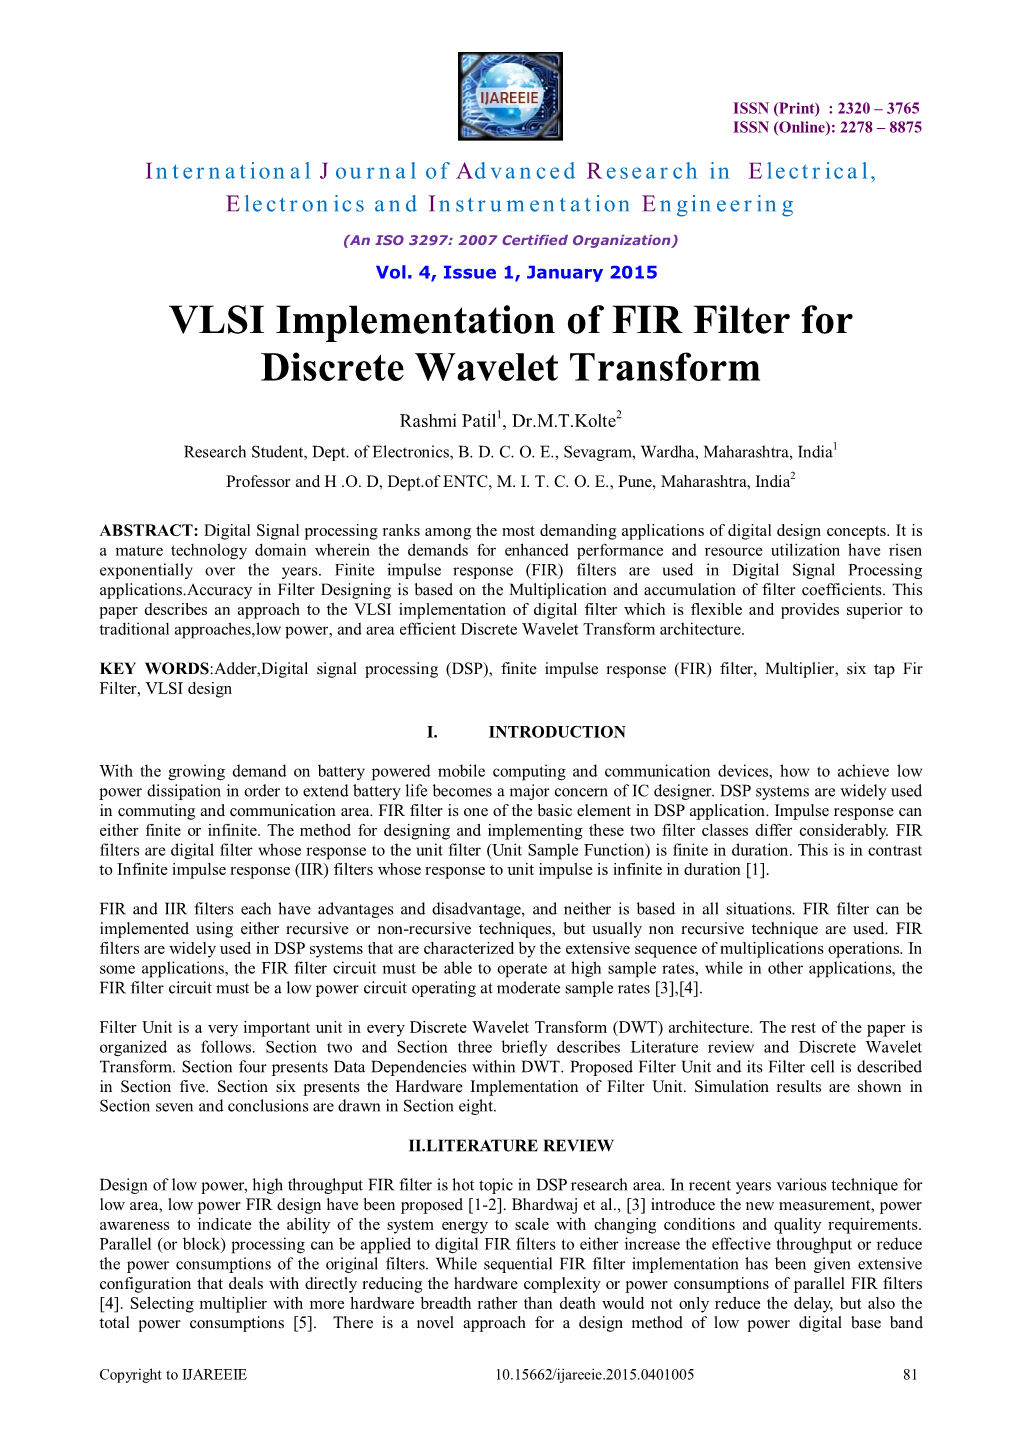 VLSI Implementation of FIR Filter for Discrete Wavelet Transform